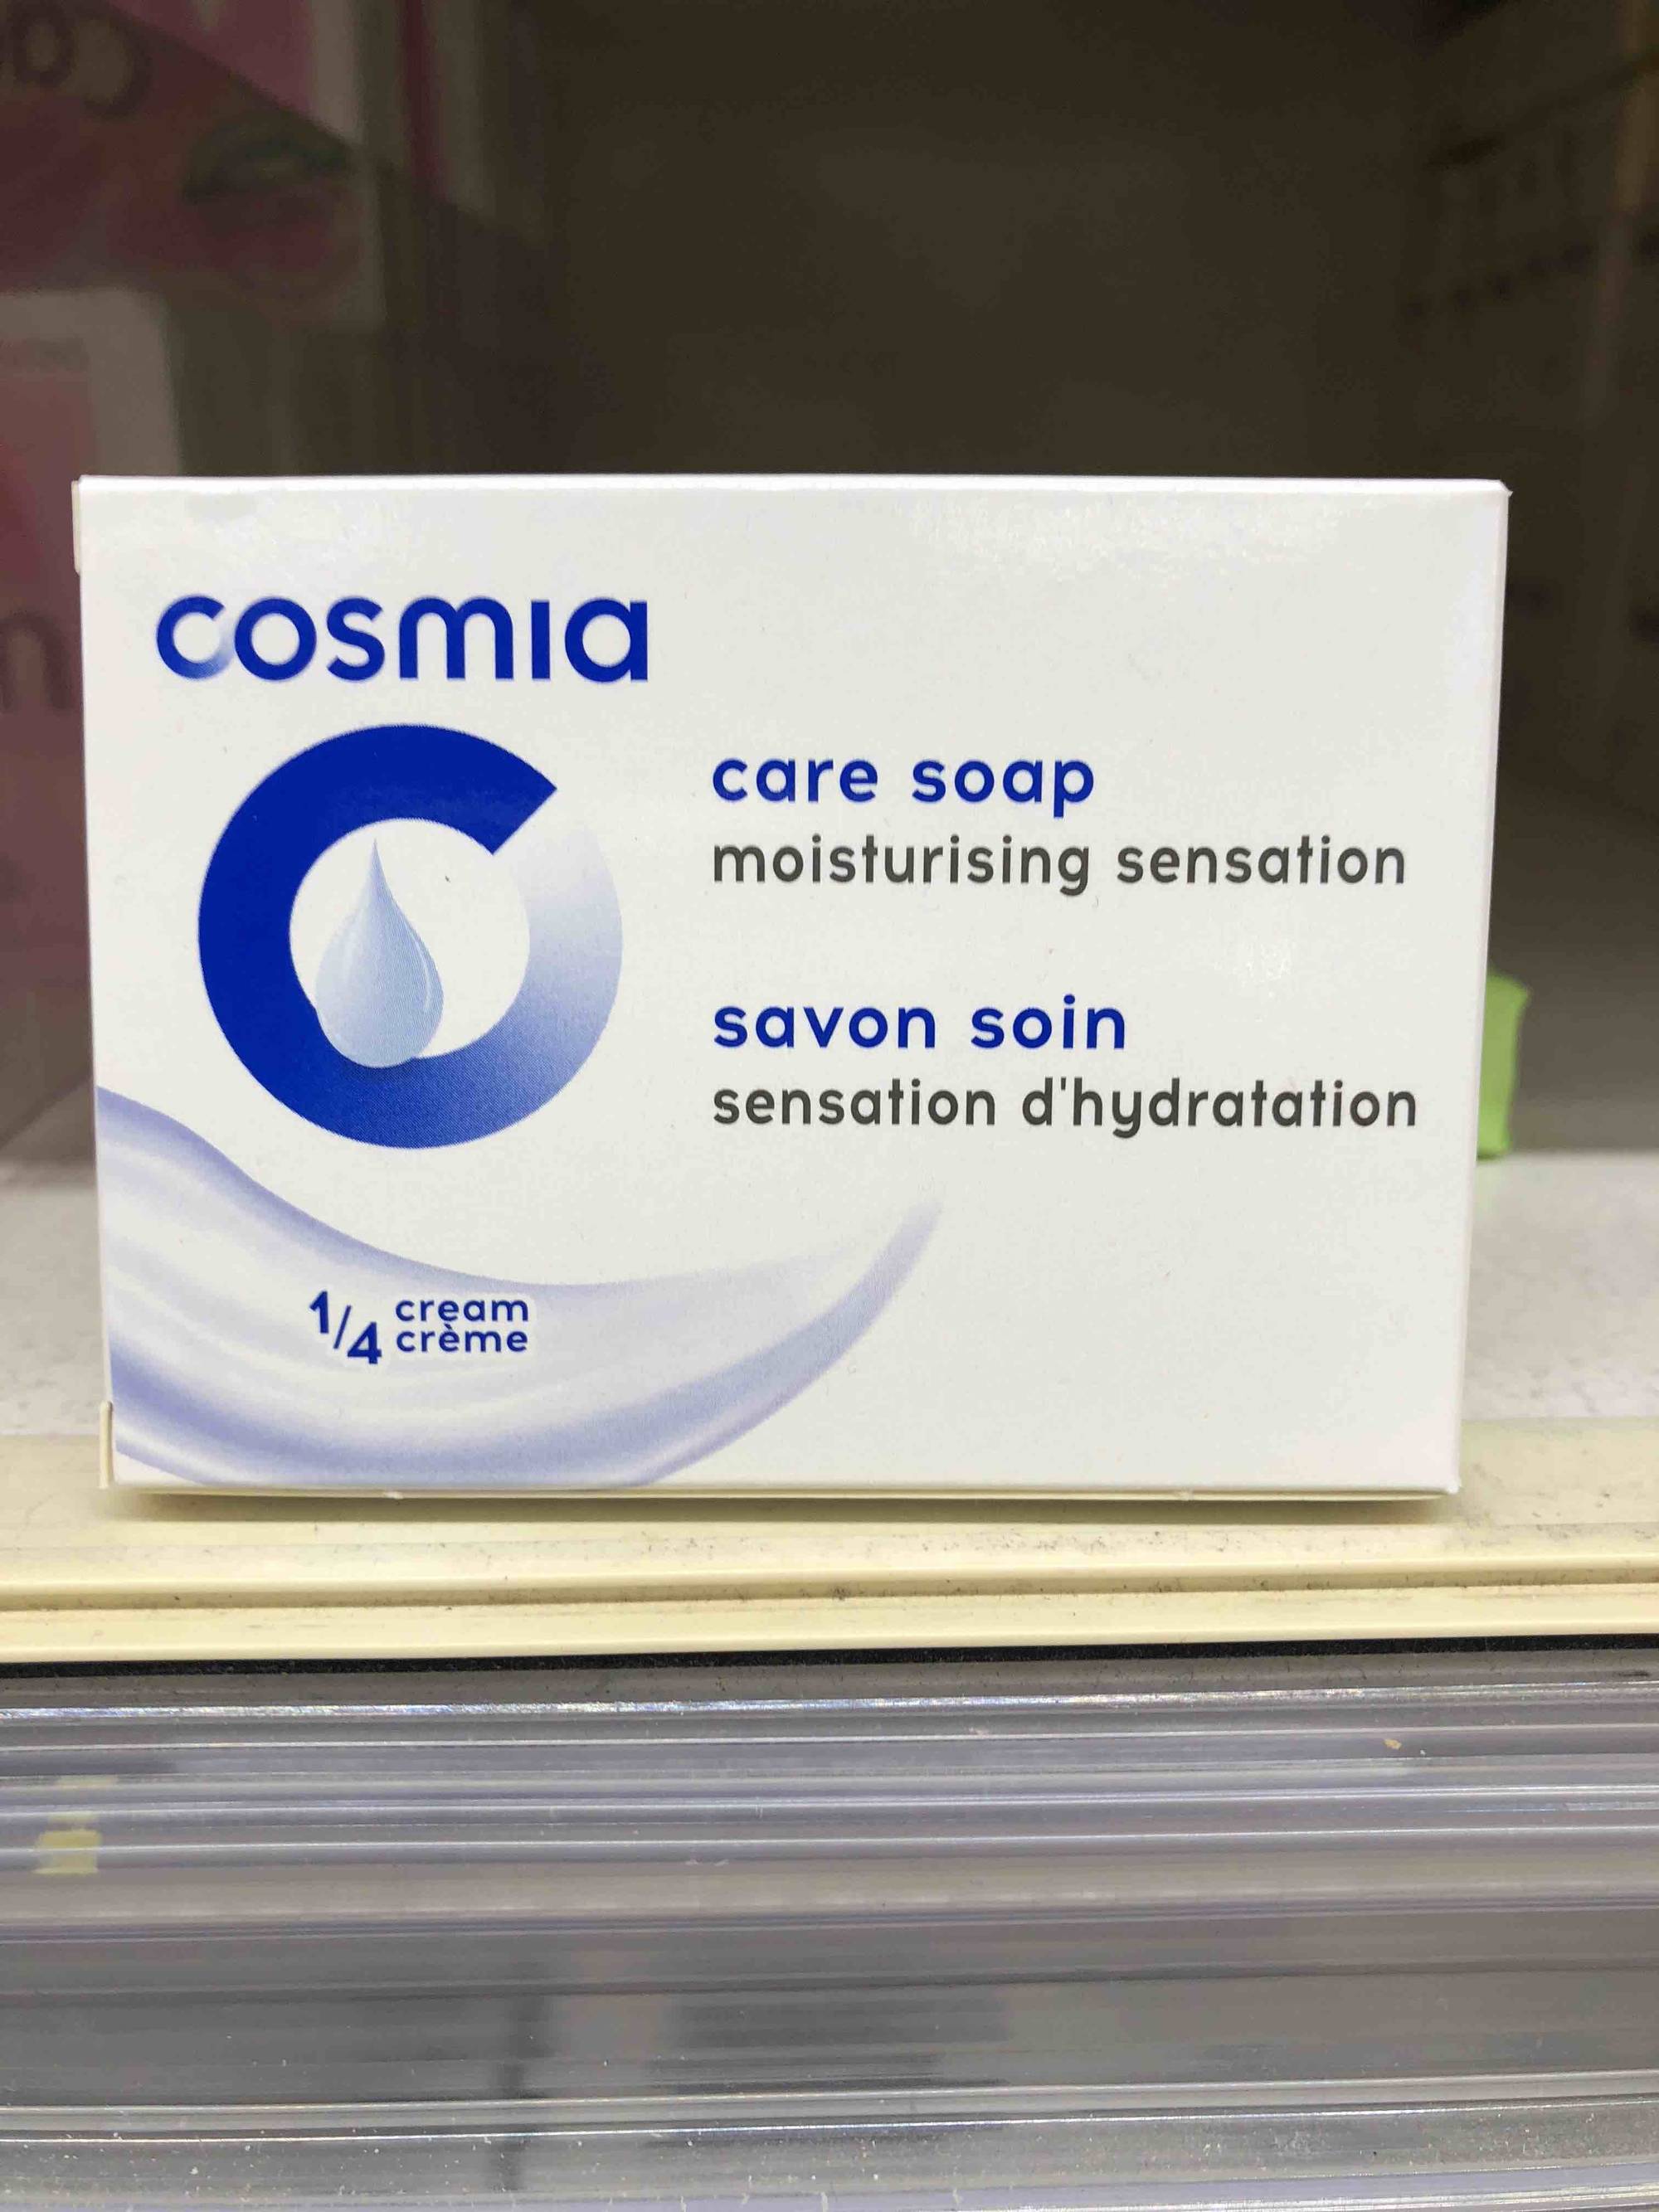 COSMIA - Savon soin sensation d'hydratation